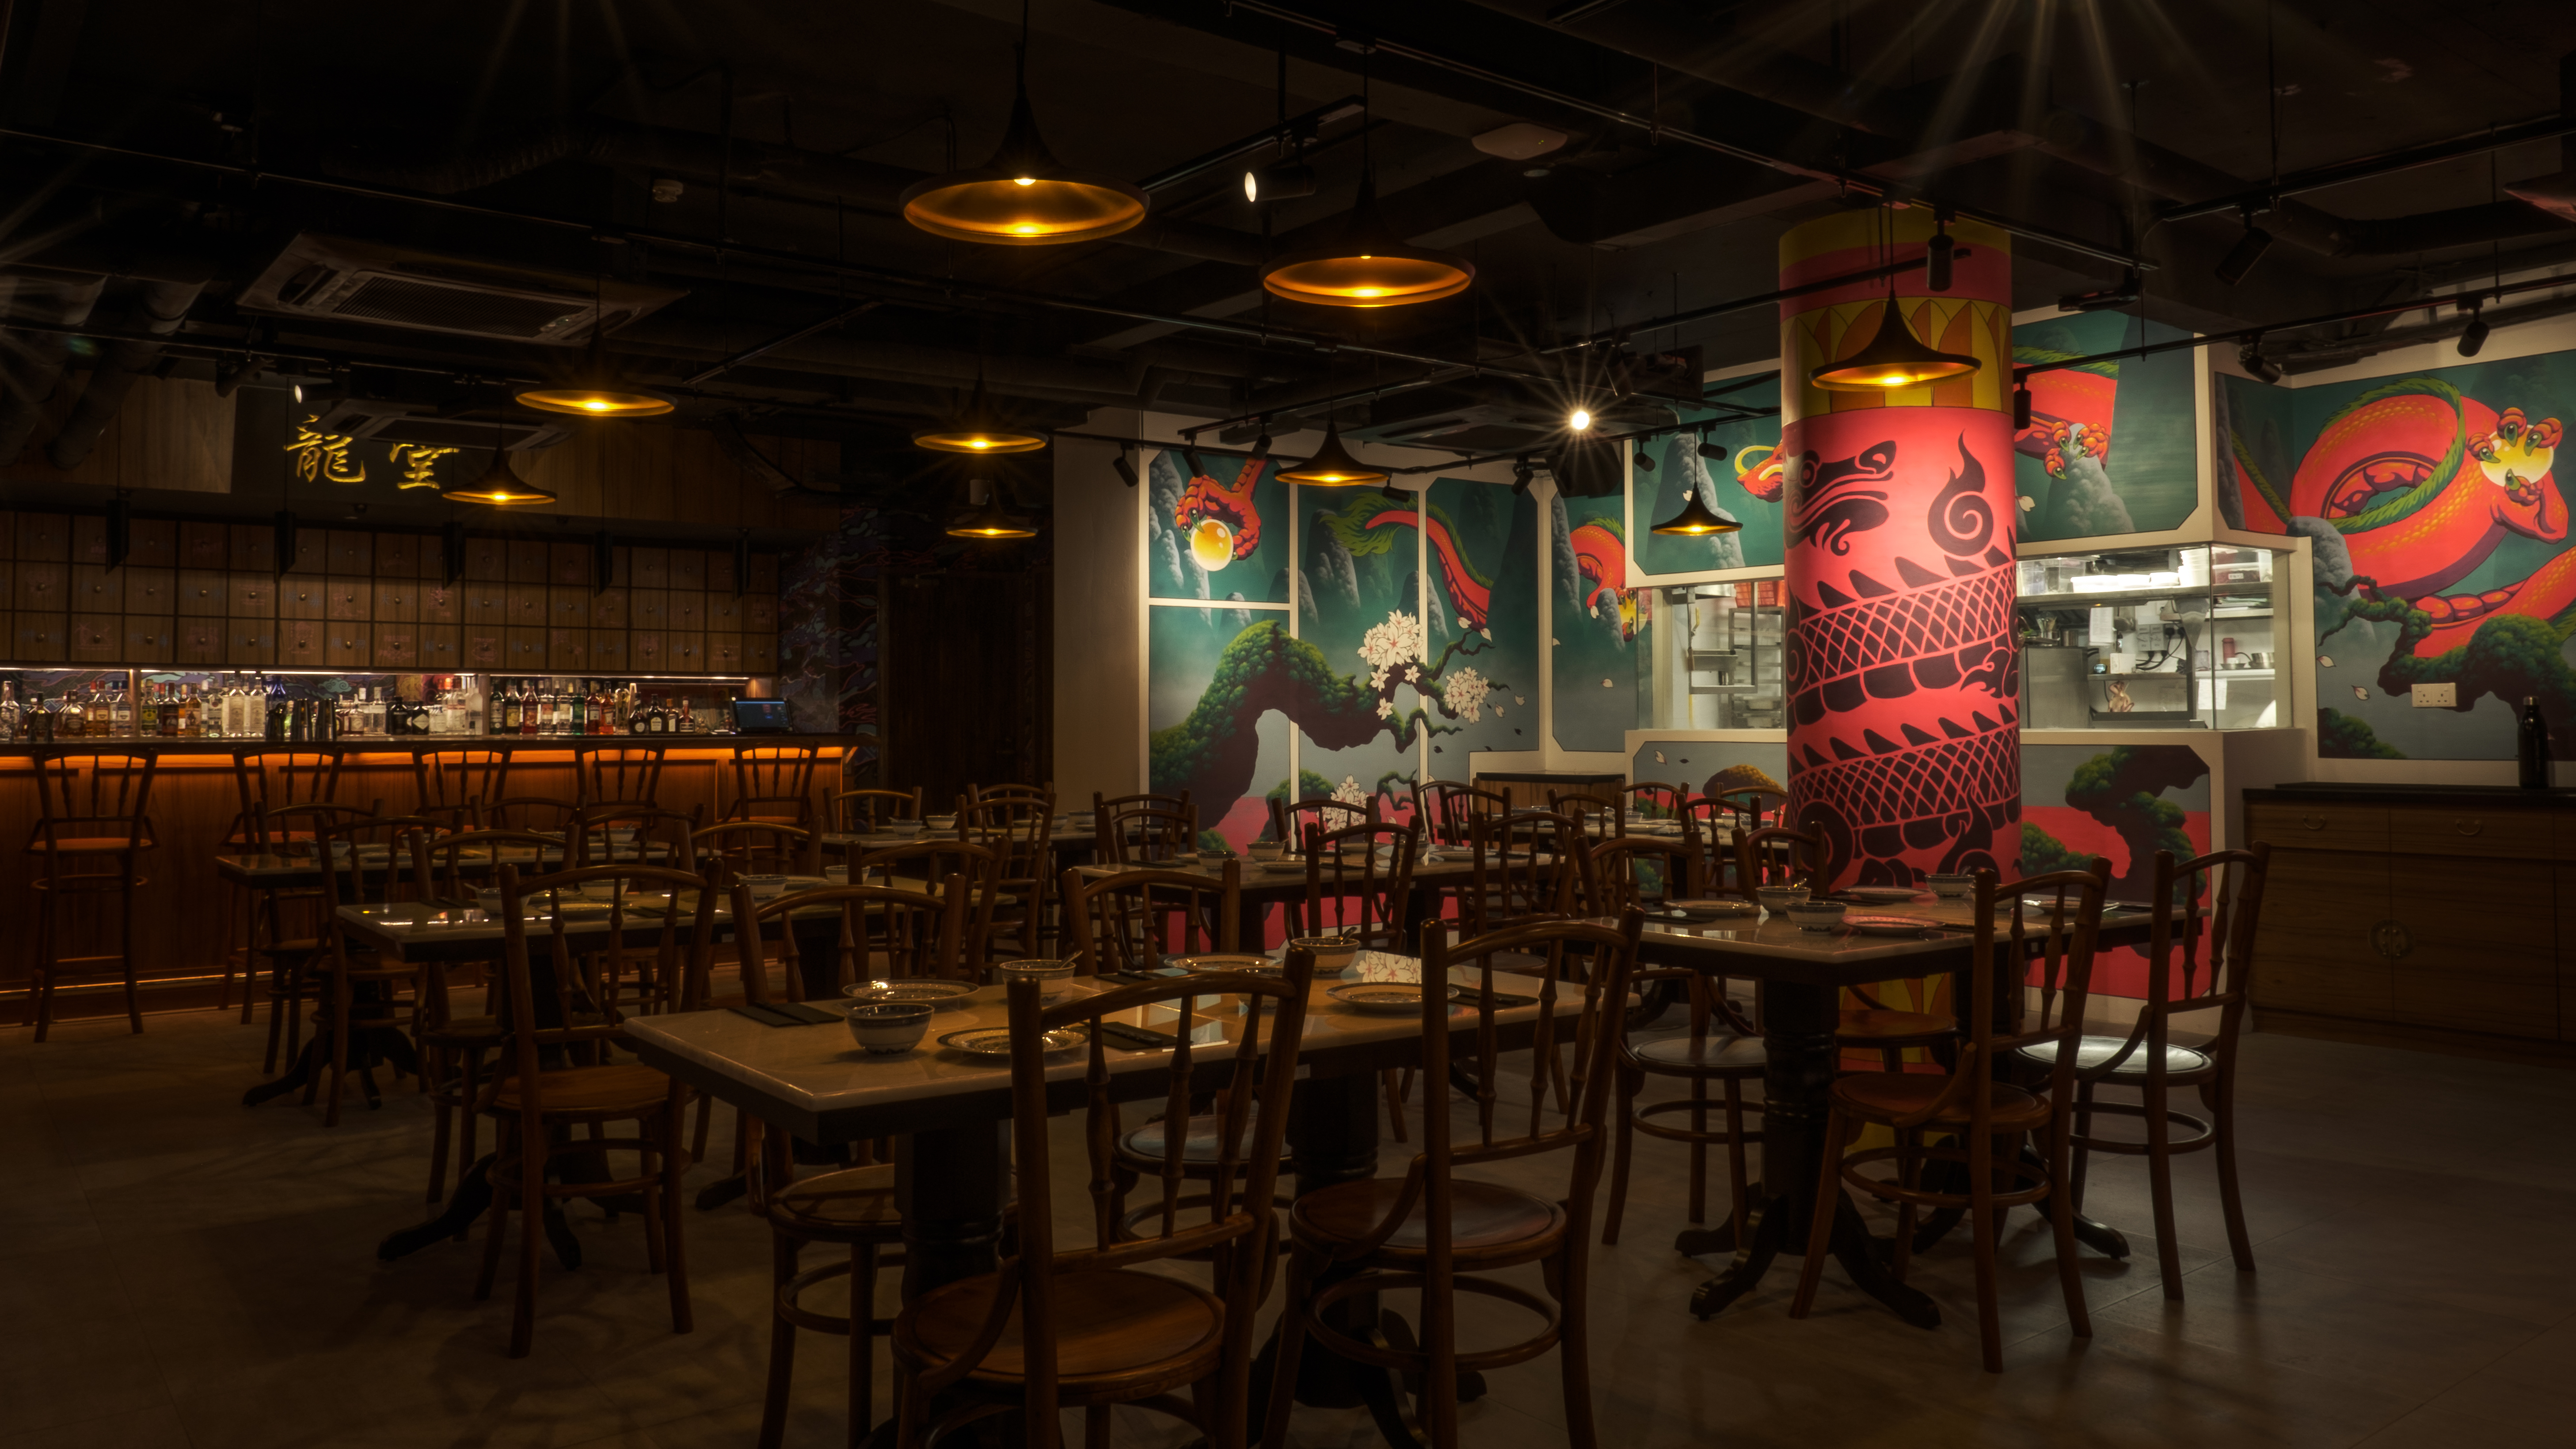 The Dragon Chamber “Secret Society” Restaurant and Bar Returns